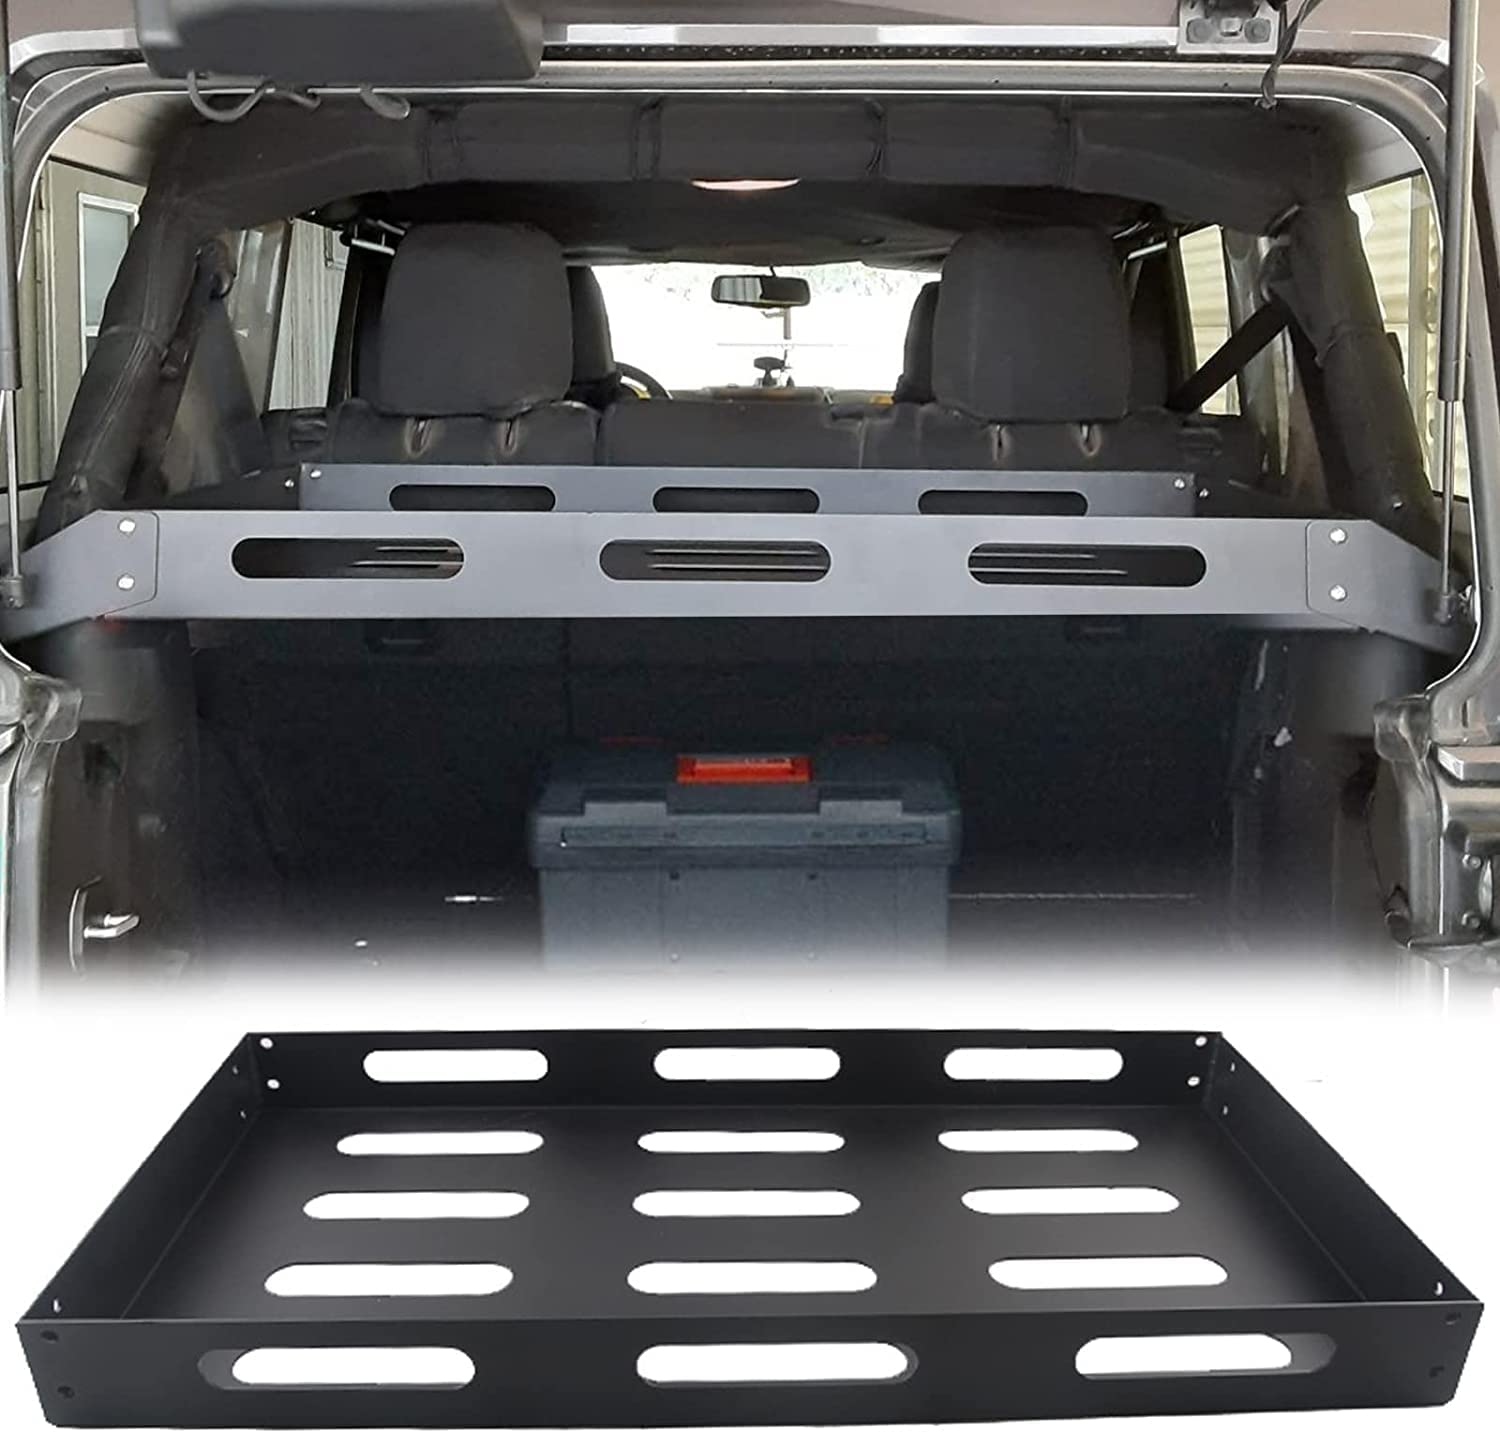 Mua AL4X4 Interior Rear Cargo Basket Rack Aluminum Alloy Shelf Luggage  Storage Carrier Compatible with 2007-2022 Jeep Wrangler JK JKU 4 Doors,  '' x 23'' x '' trên Amazon Mỹ chính hãng 2023 | Giaonhan247